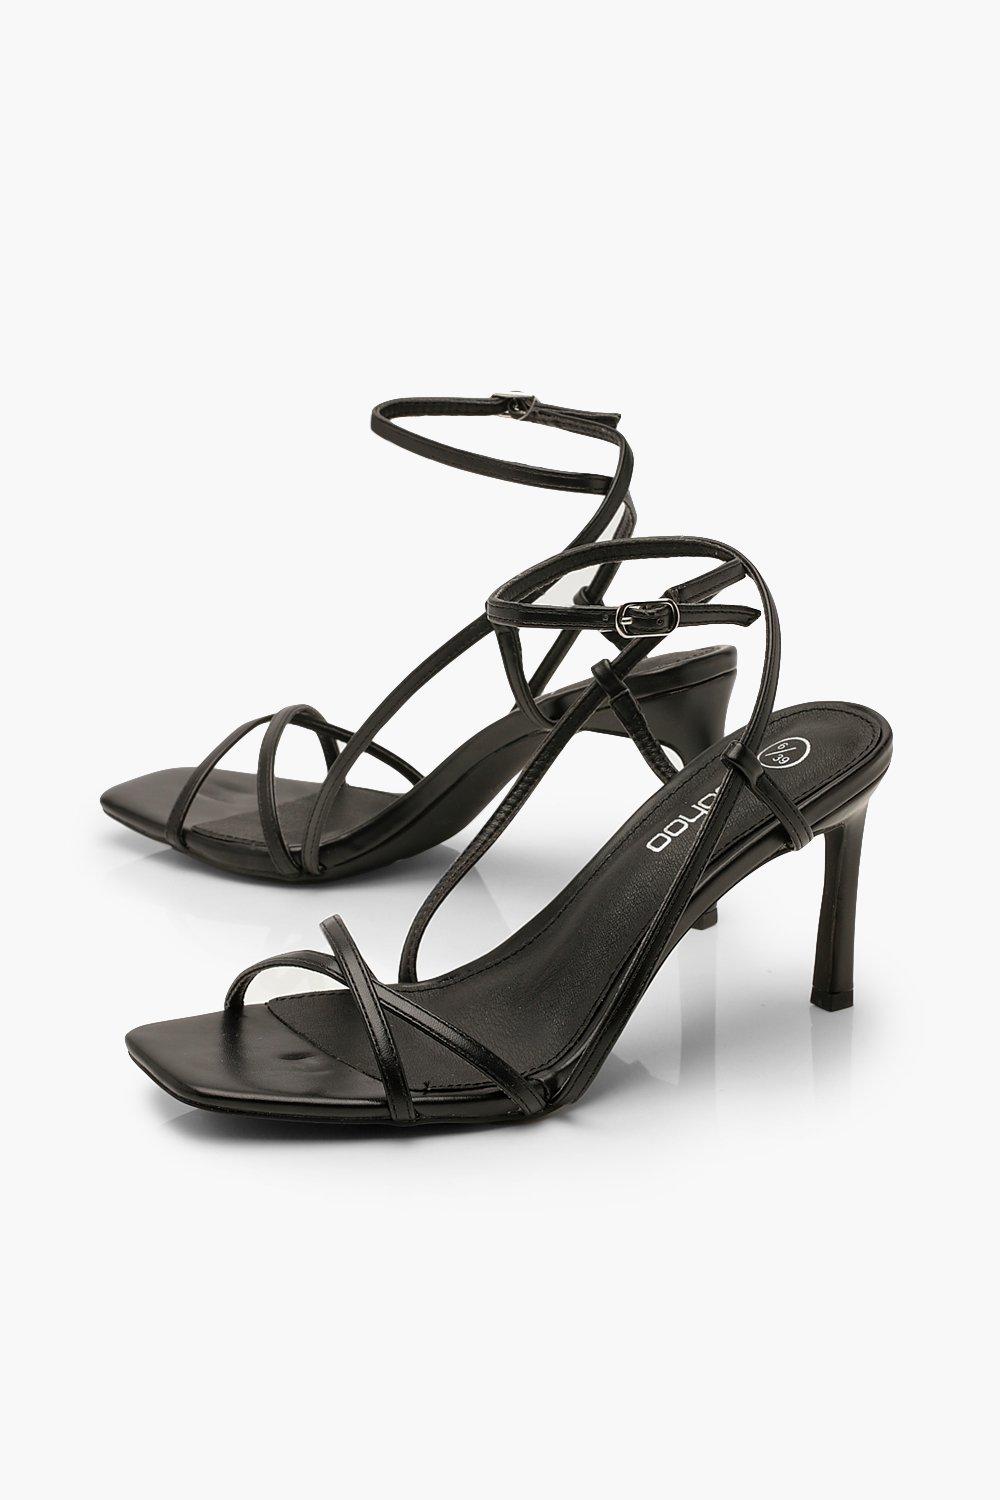 square sandal heel